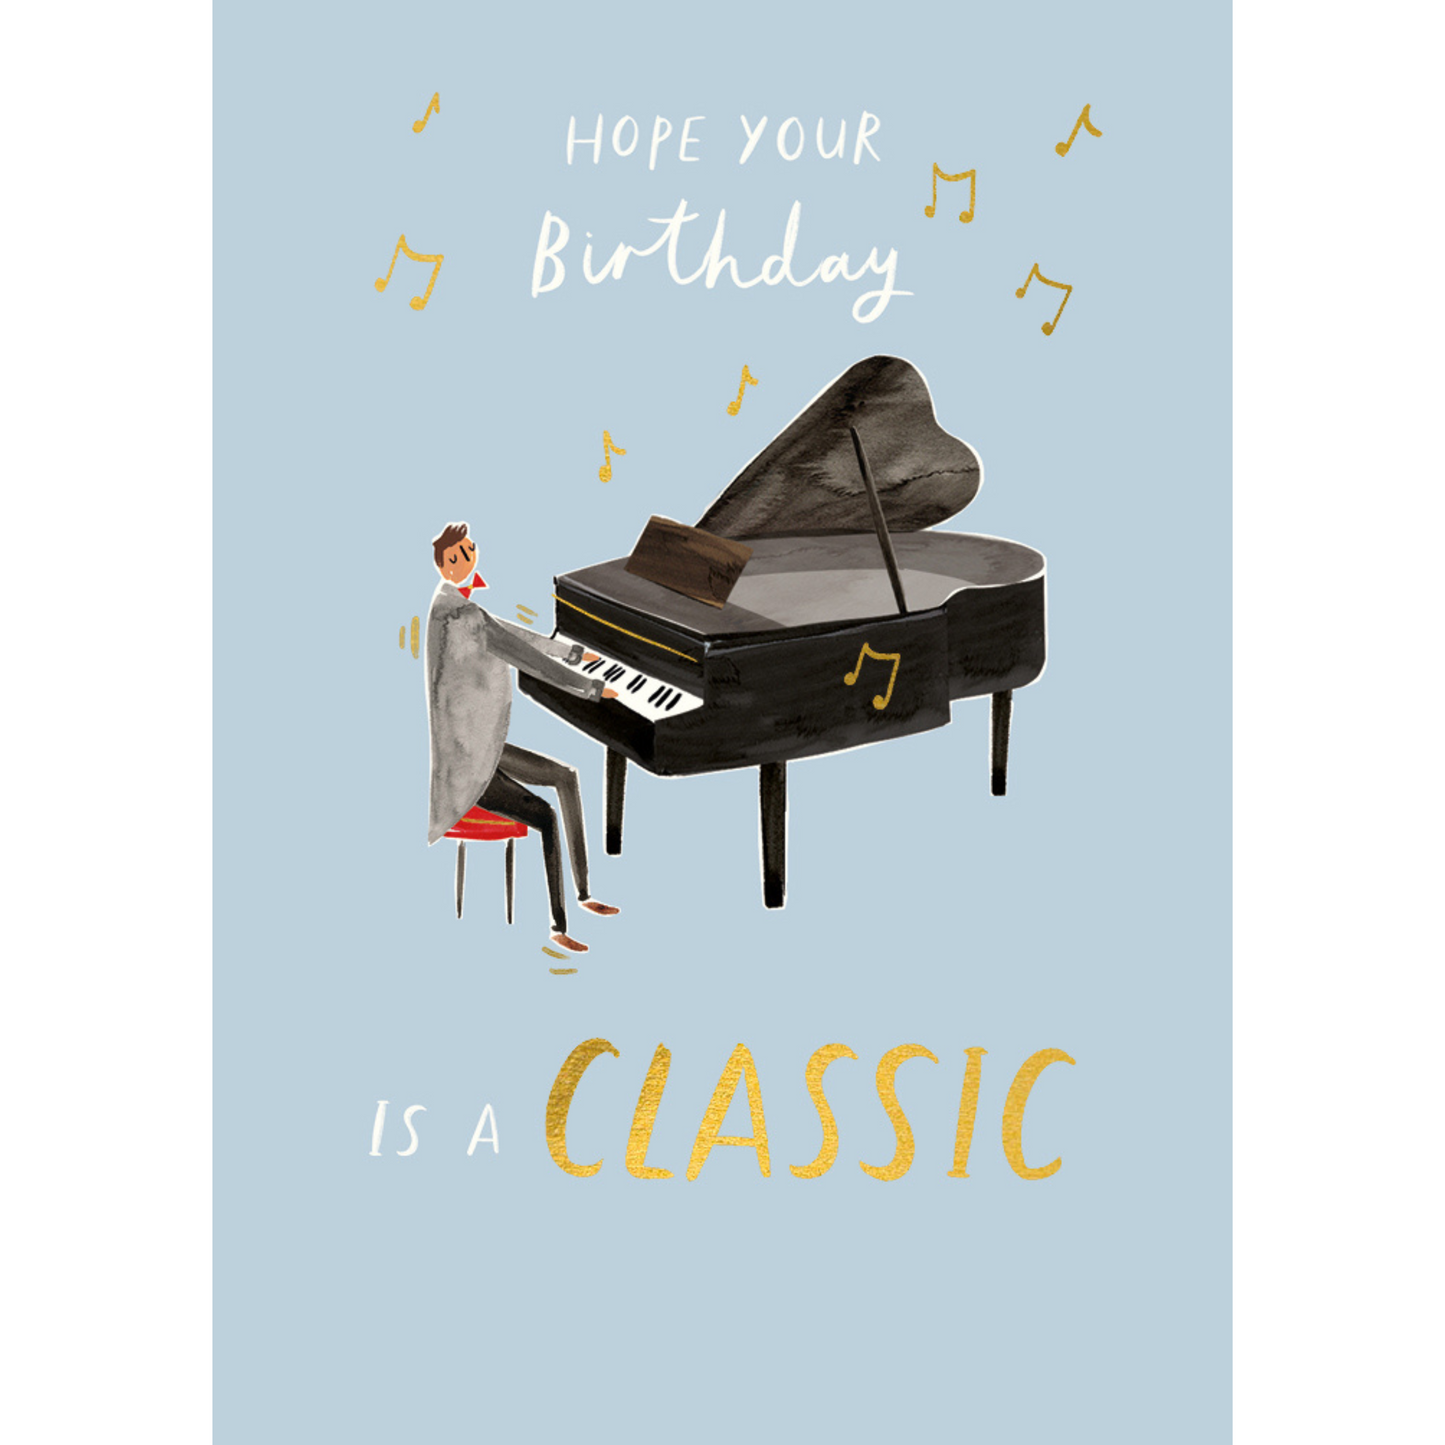 Classic Birthday Card